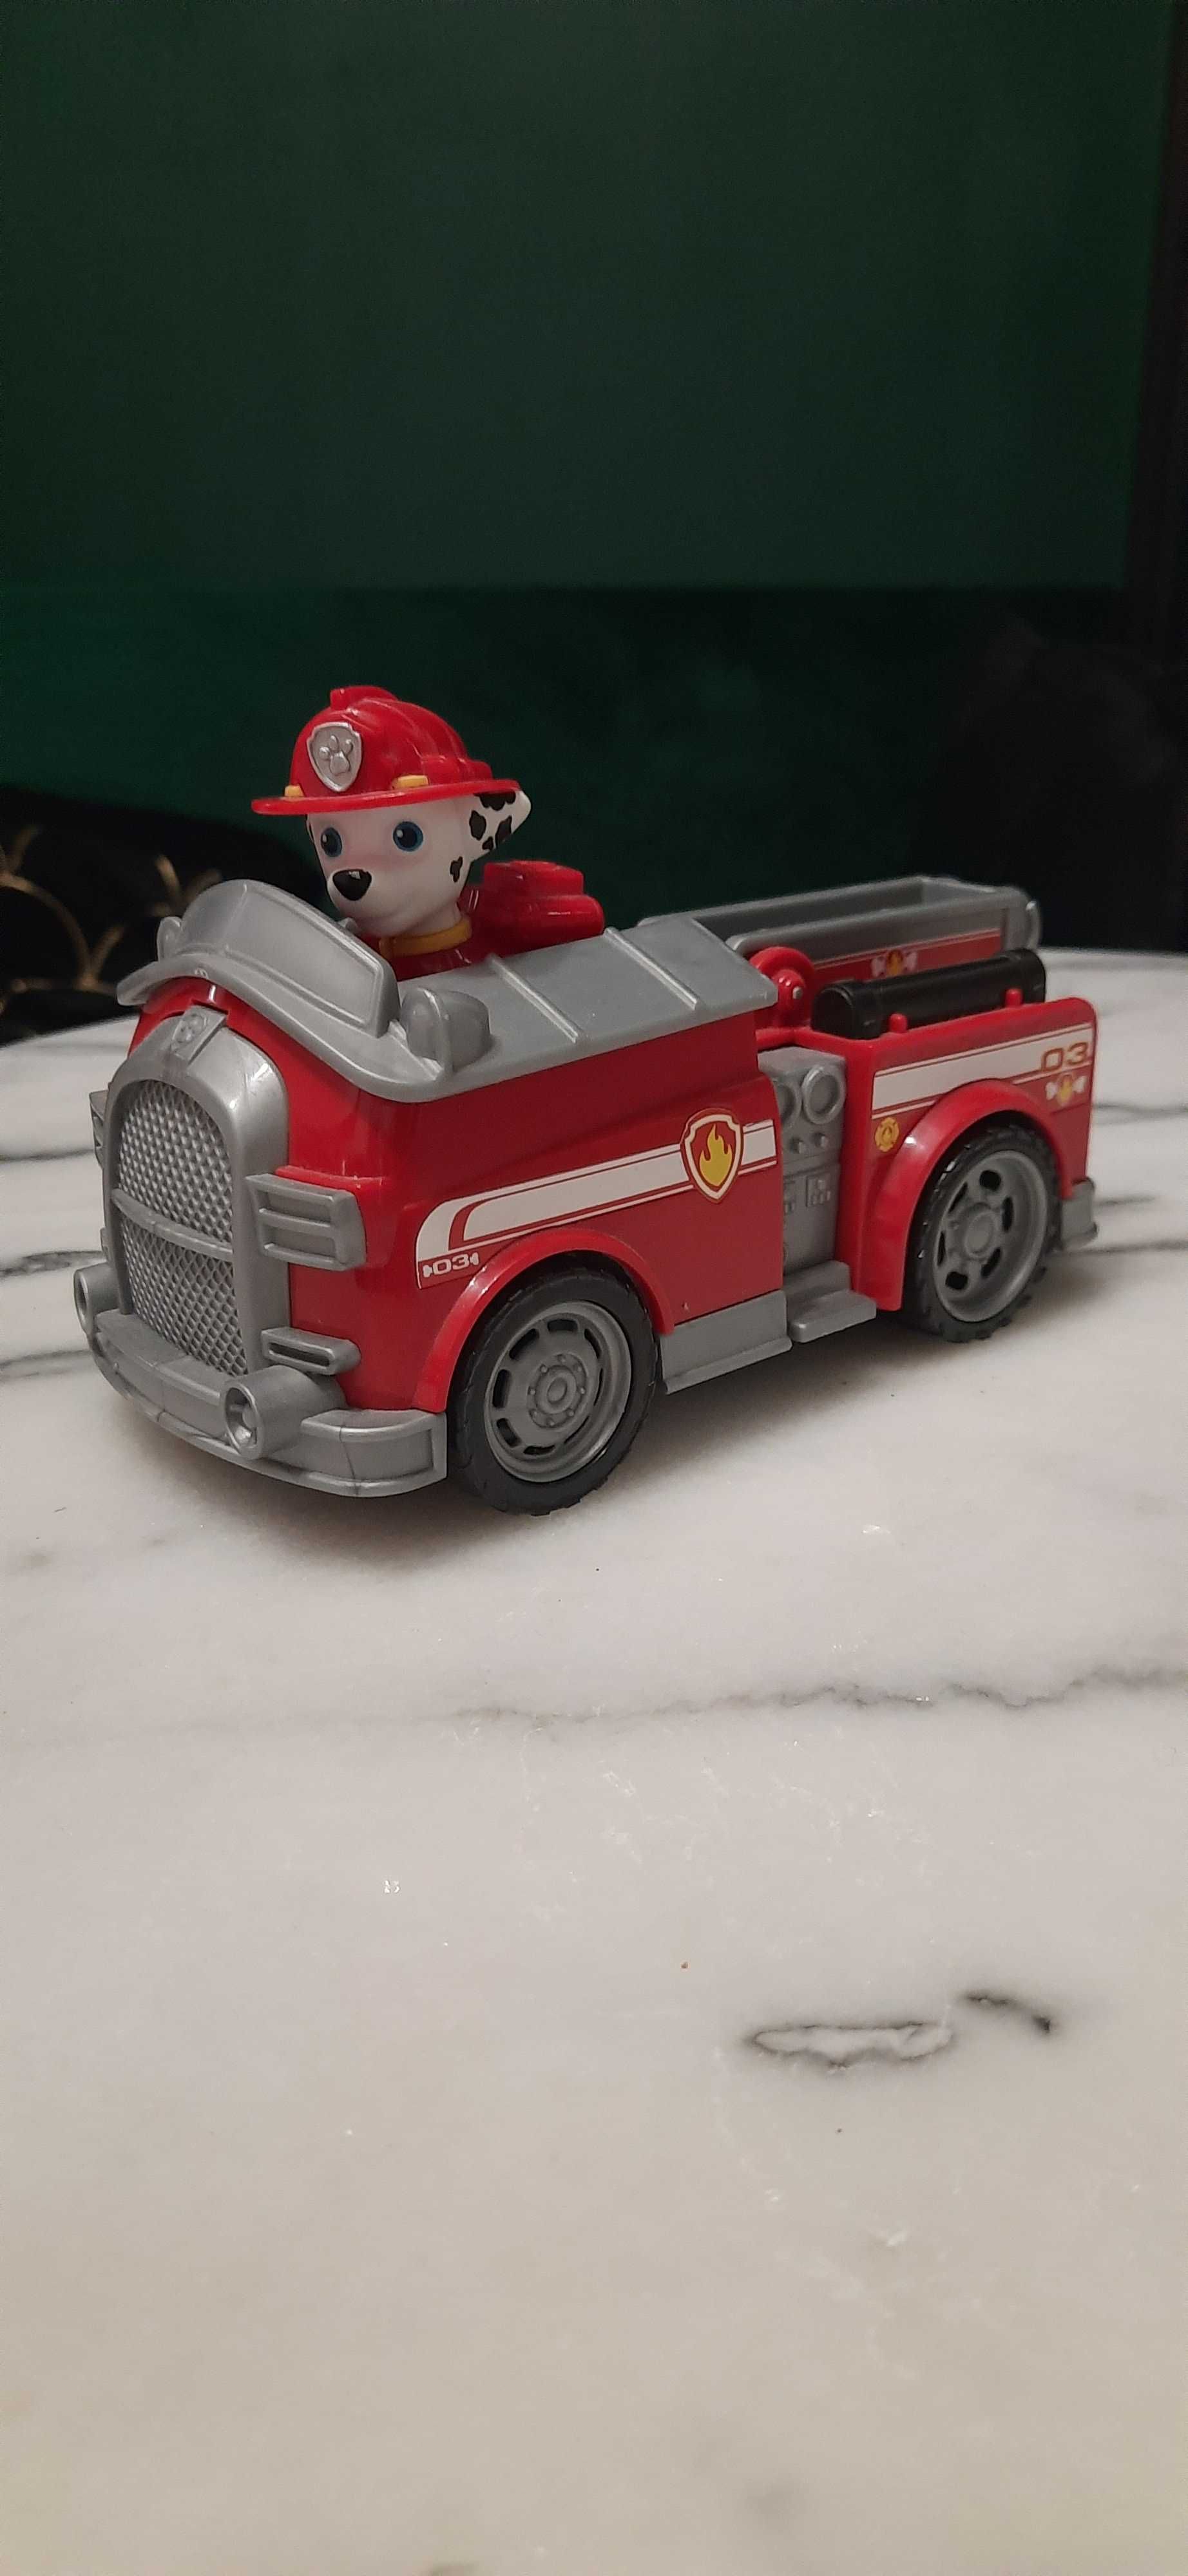 Pojazd Psi Patrol I figurka Marshalla